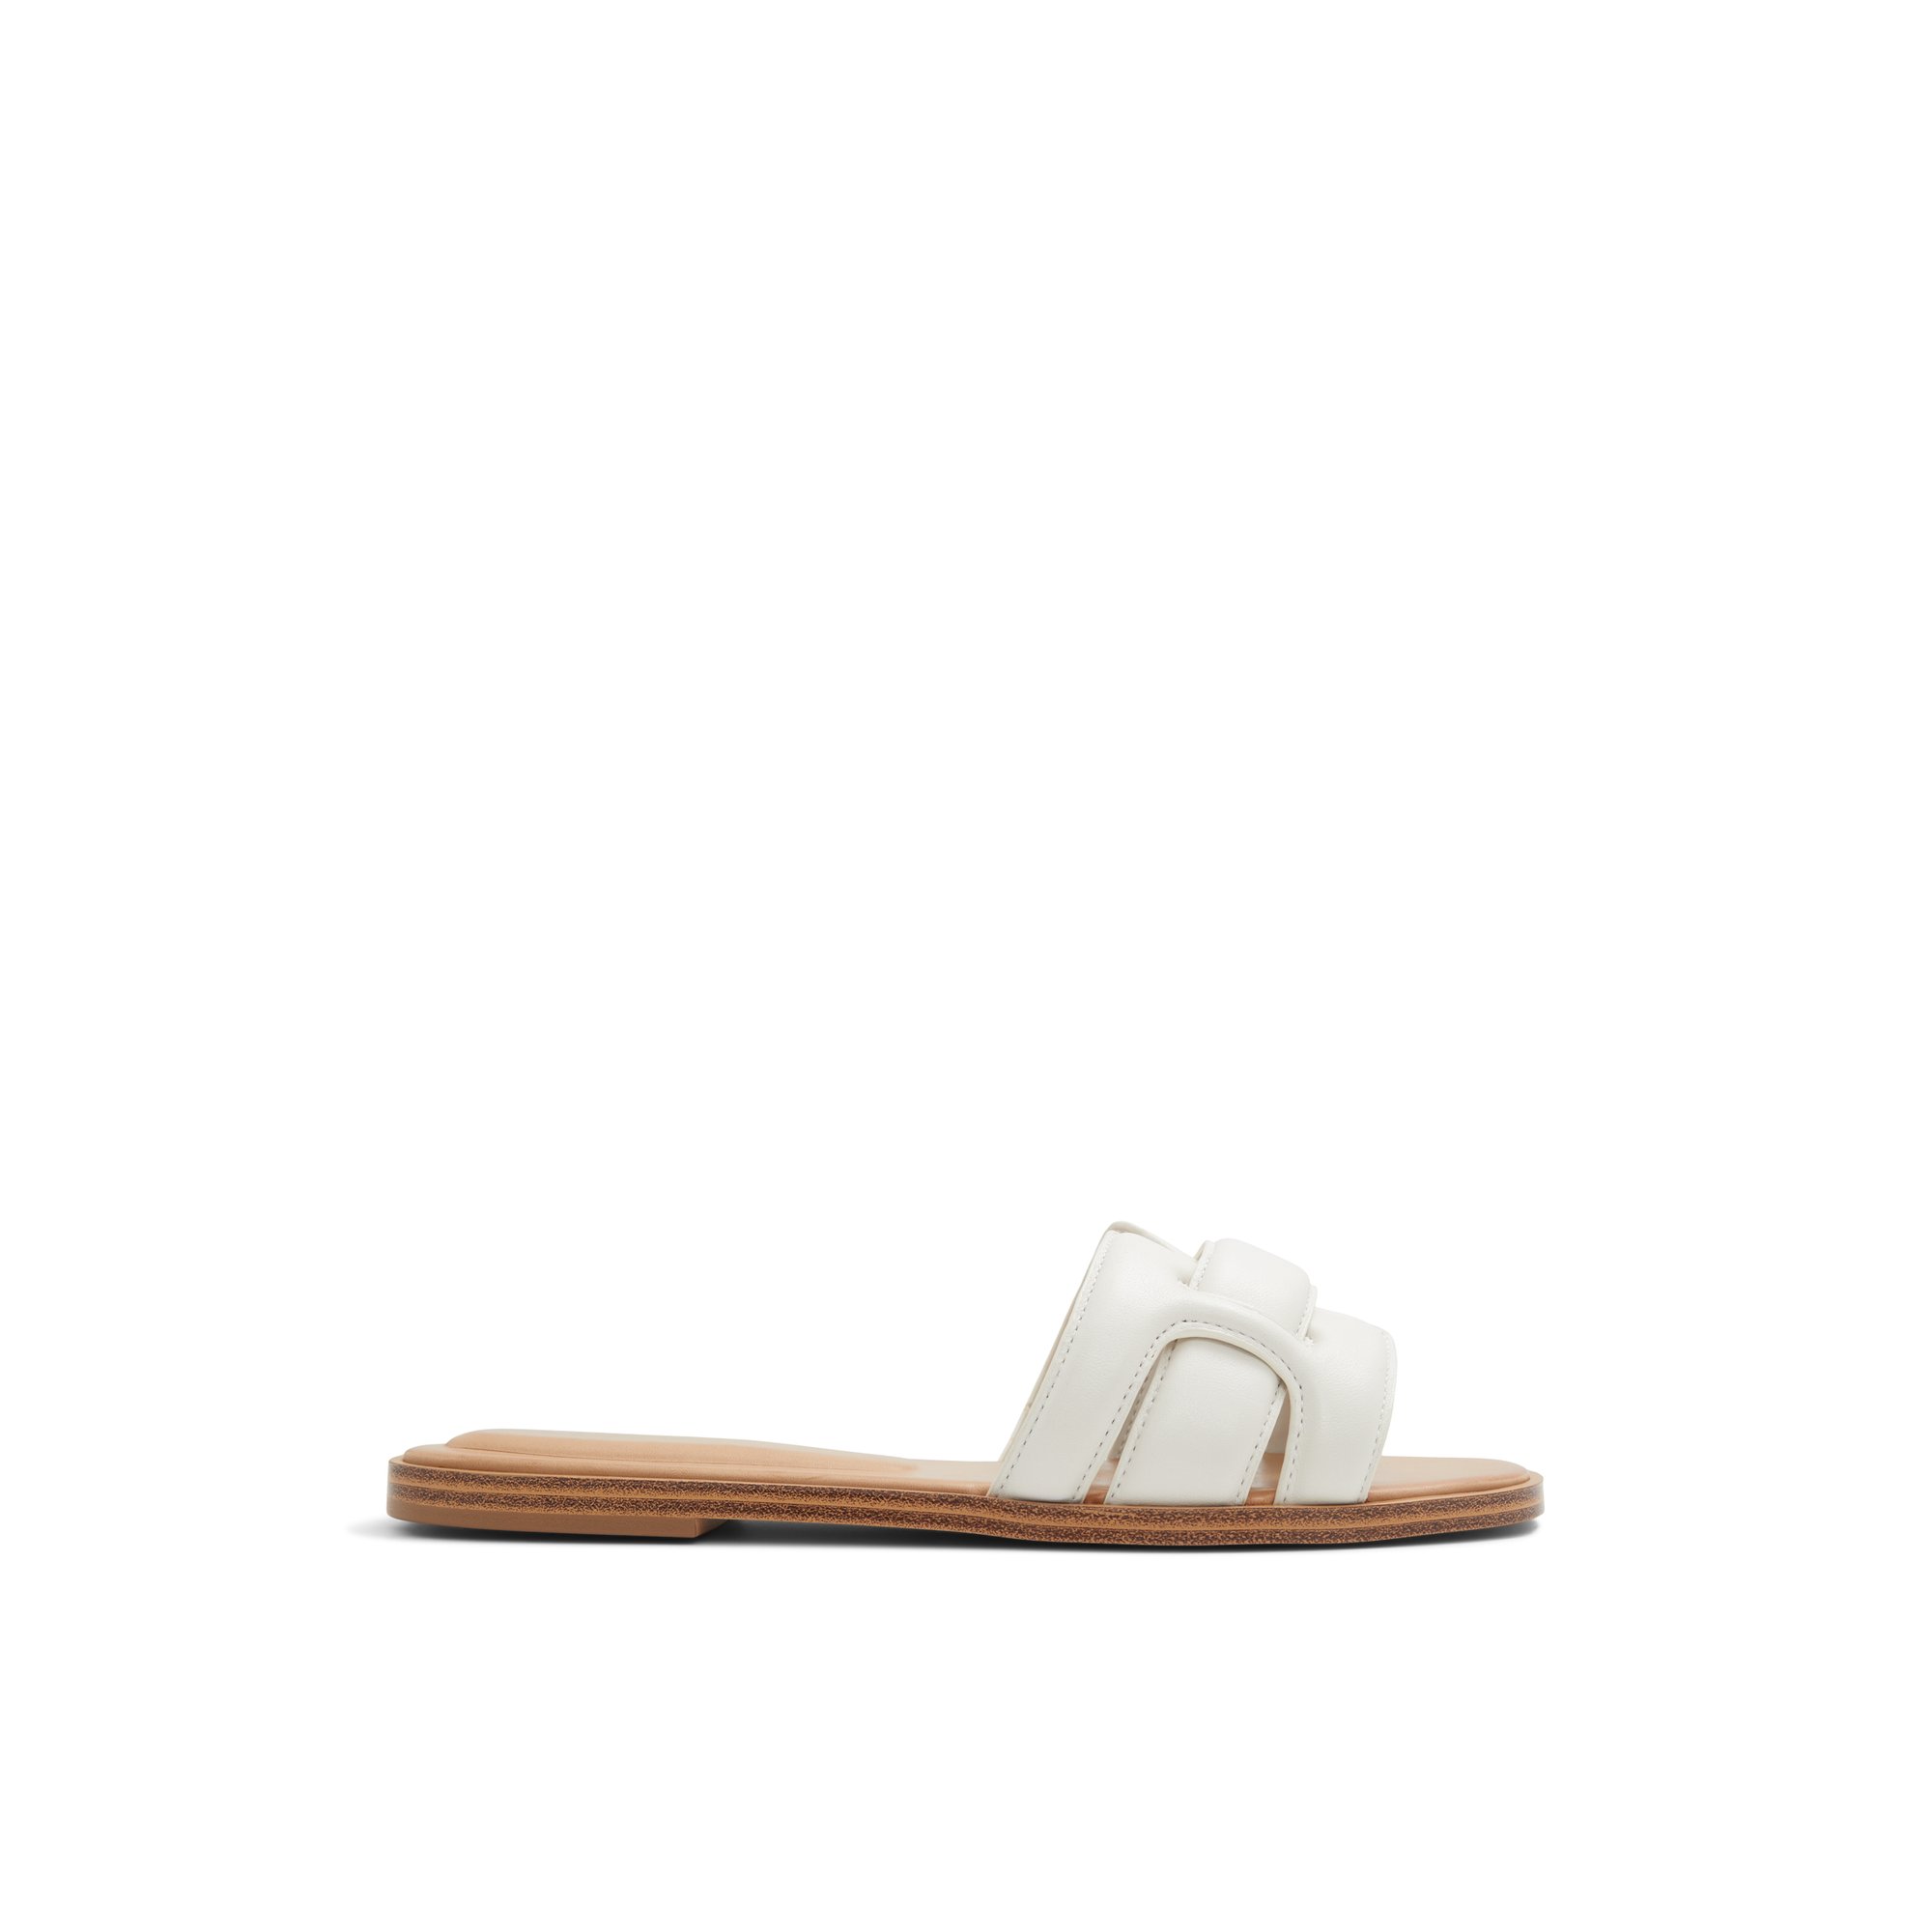 ALDO Elenaa - Women's Sandals Flats - White